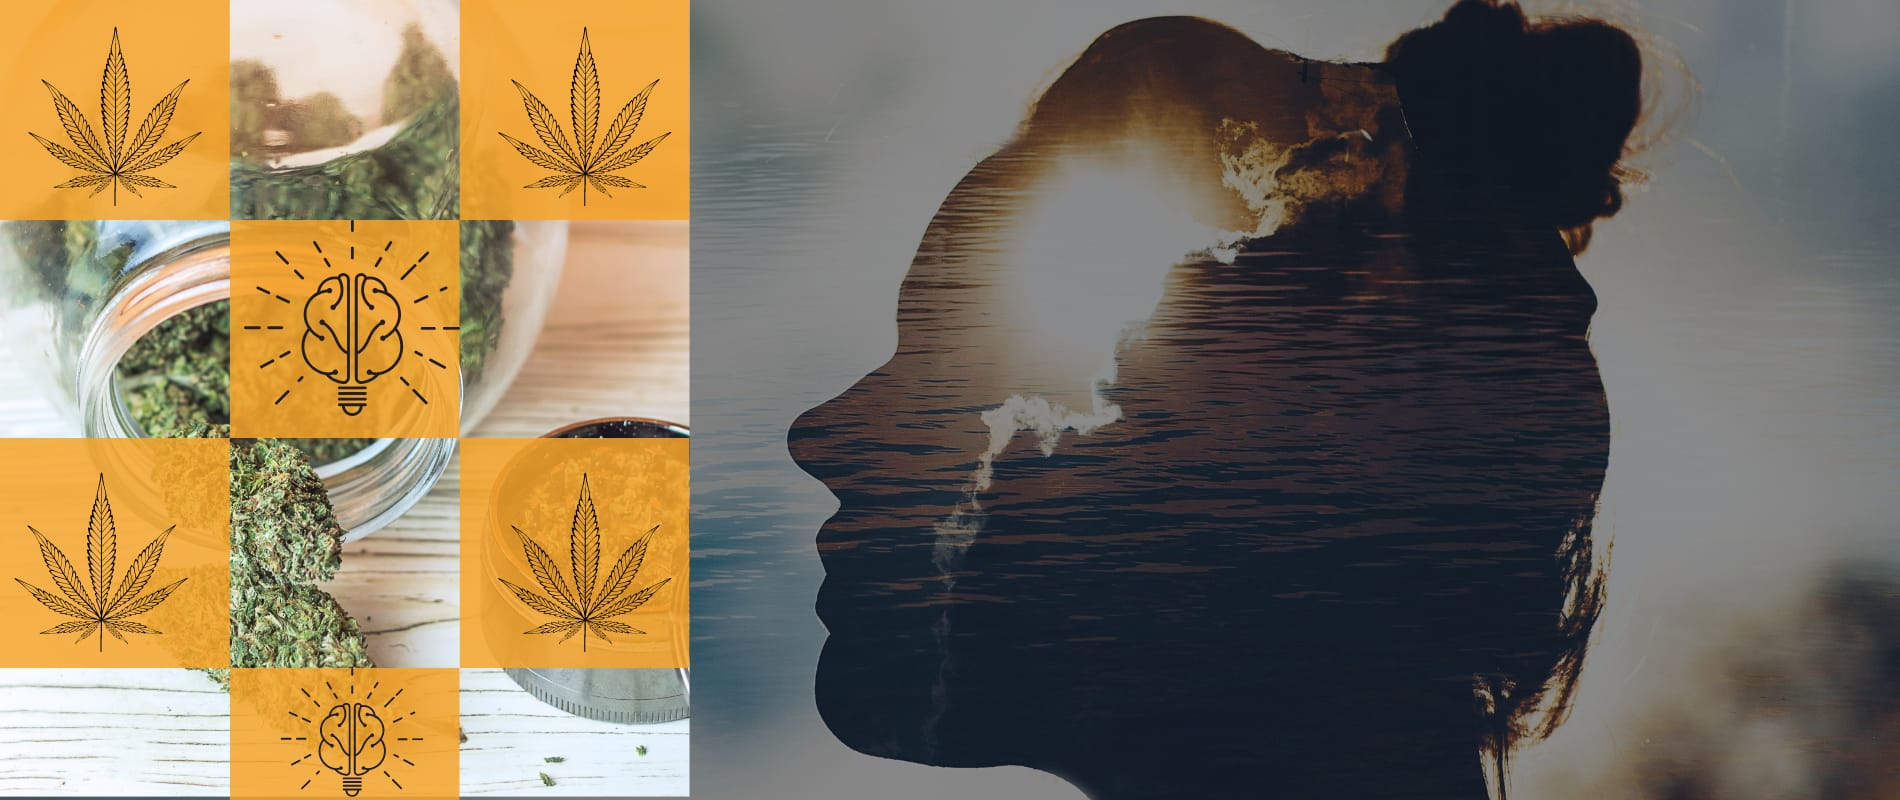 Introducing Menu Tactics and Psychology for Cannabis Retailers